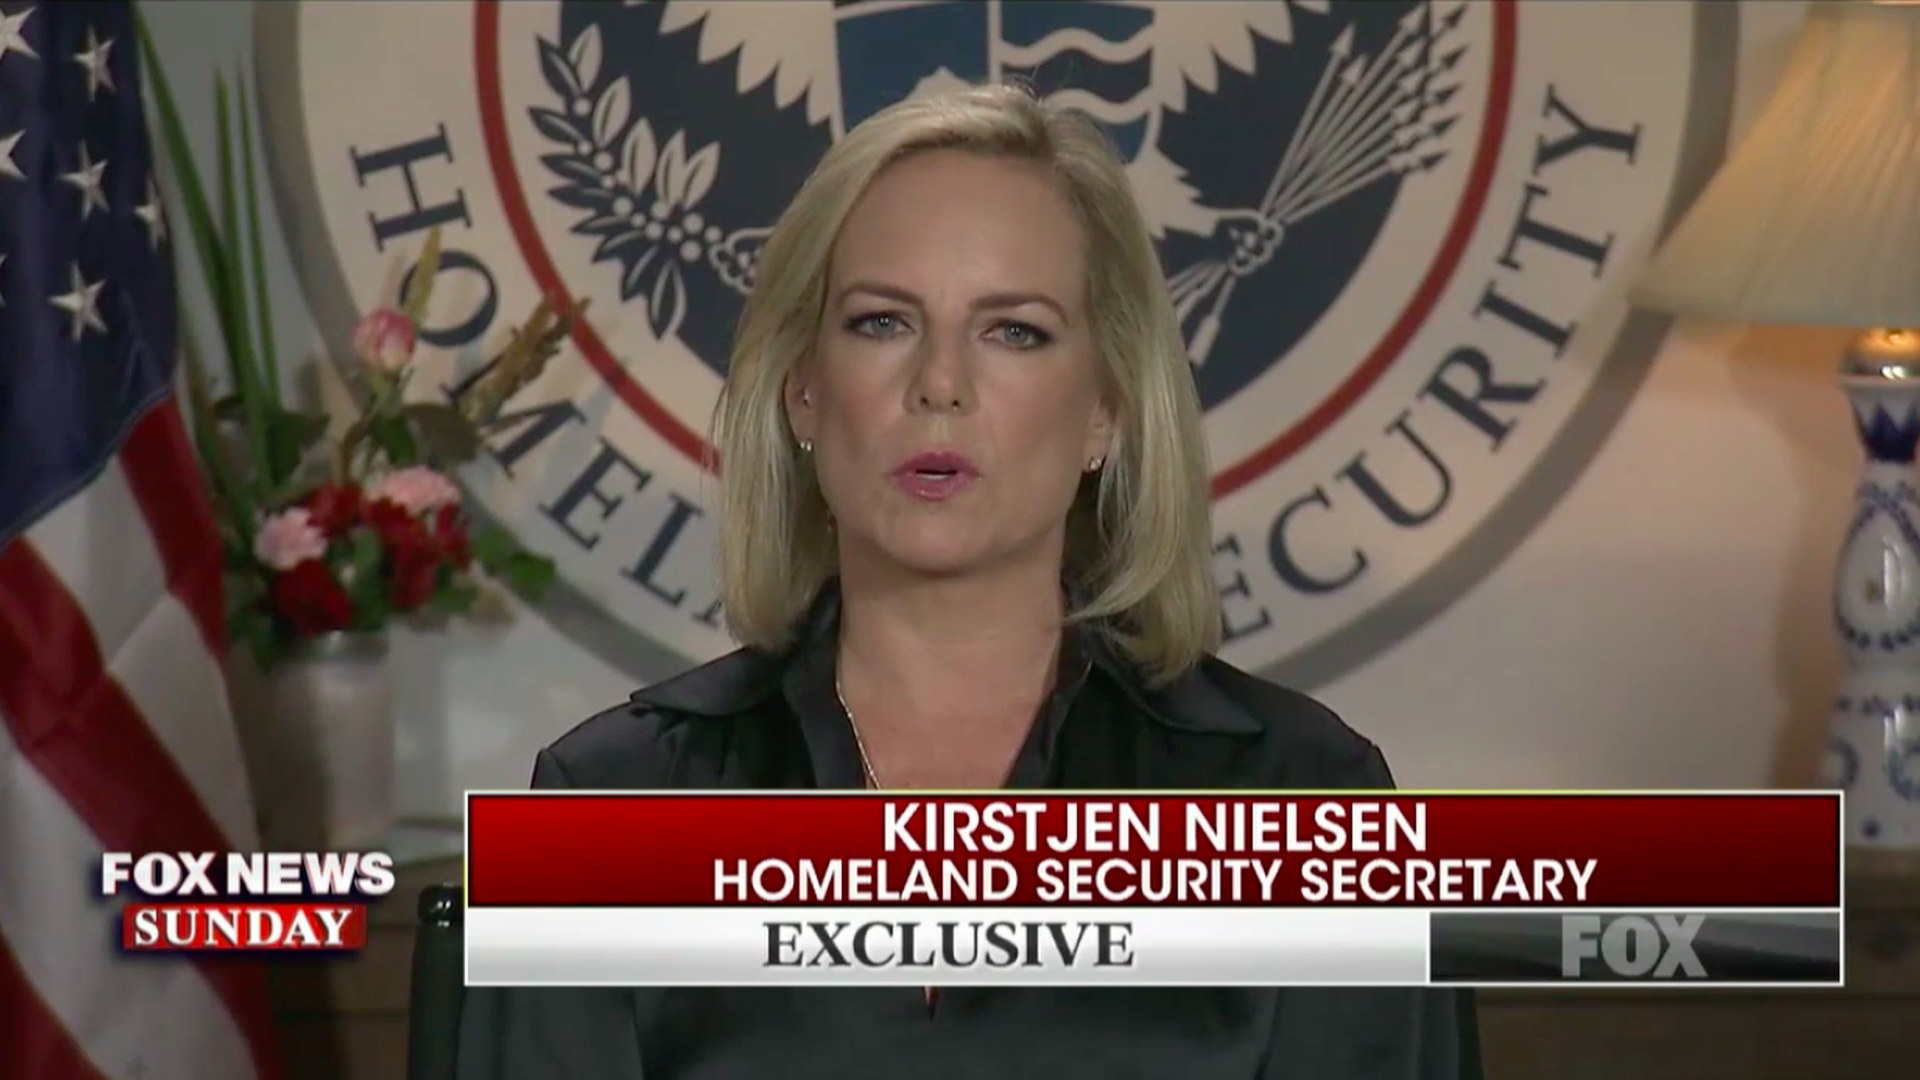 Kirstjen Nielsen on Fox